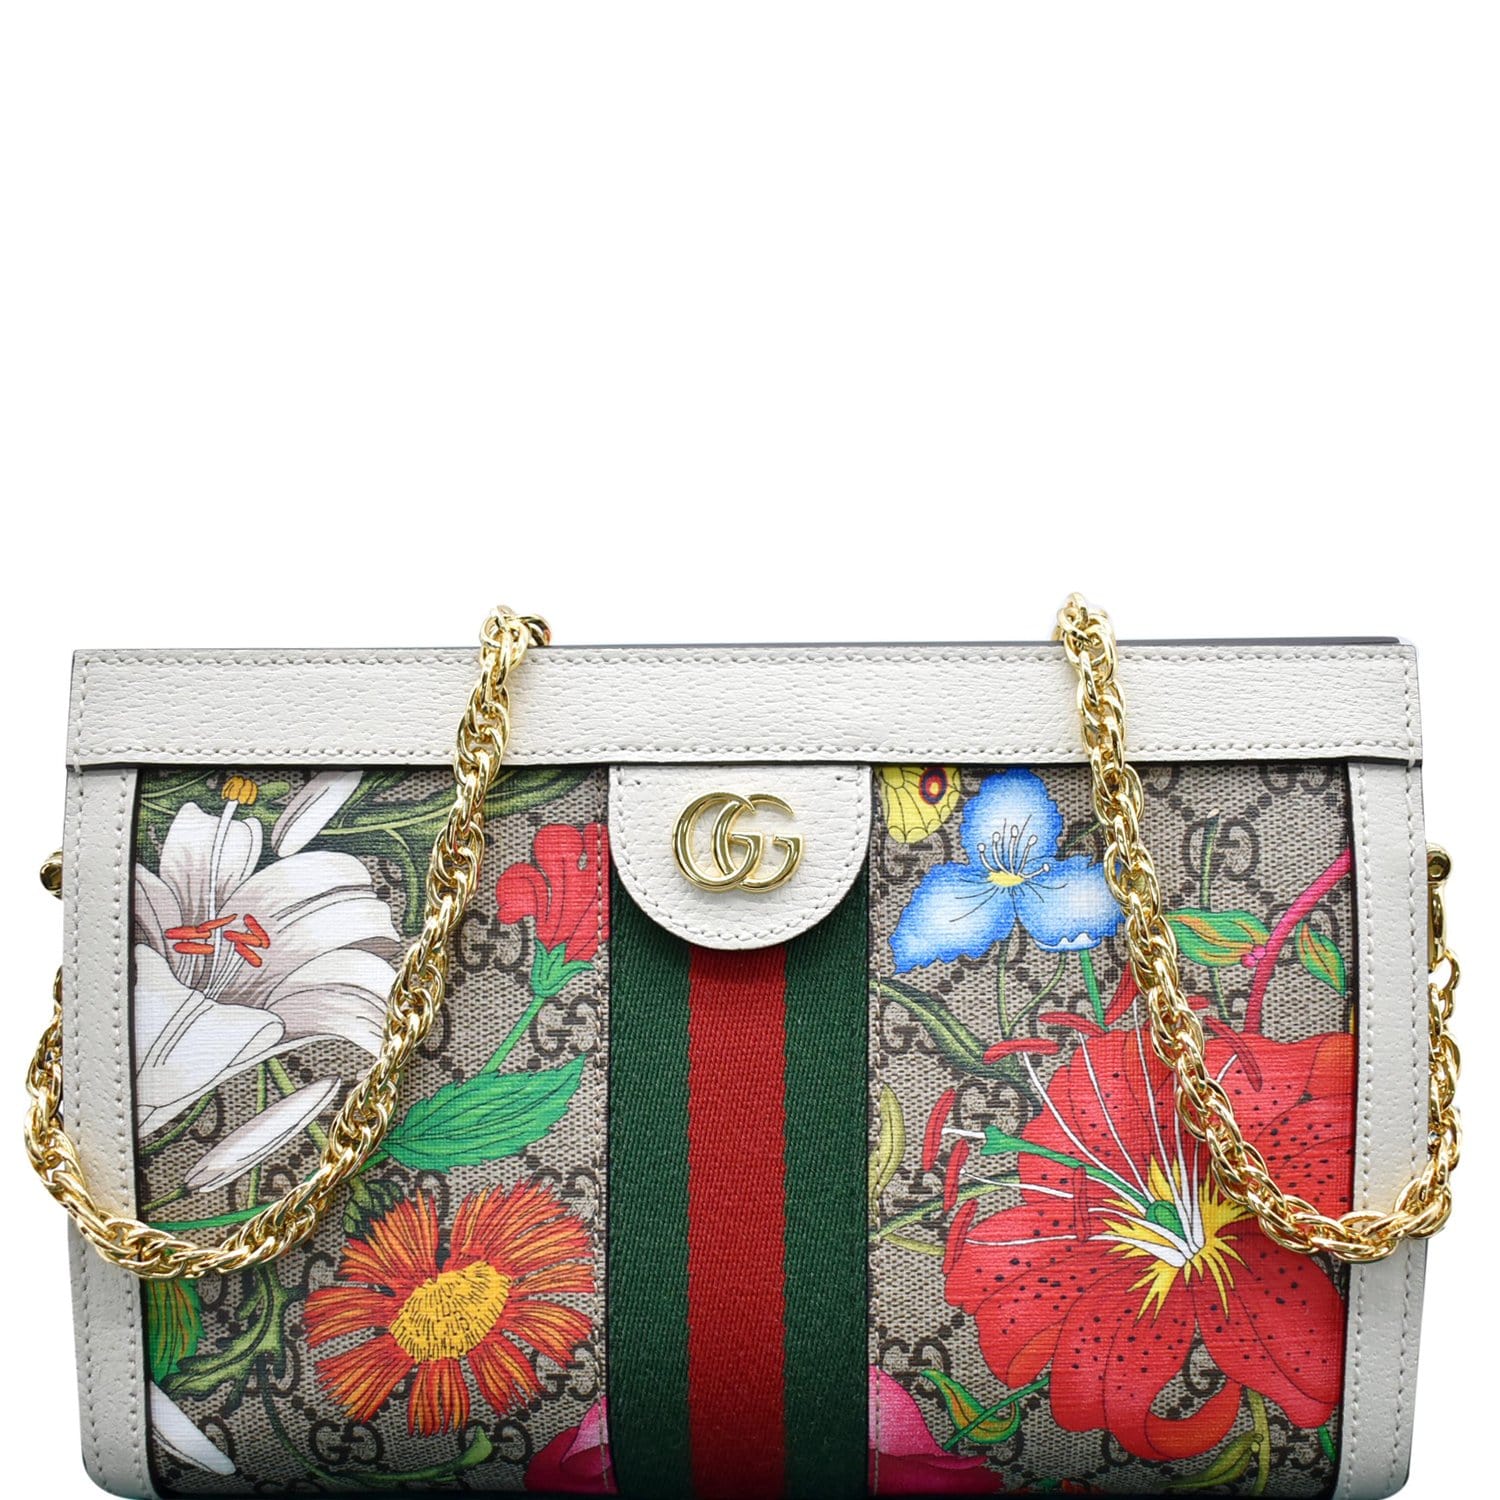 I am looking to buy a Gucci handbag replica. How can I reach you